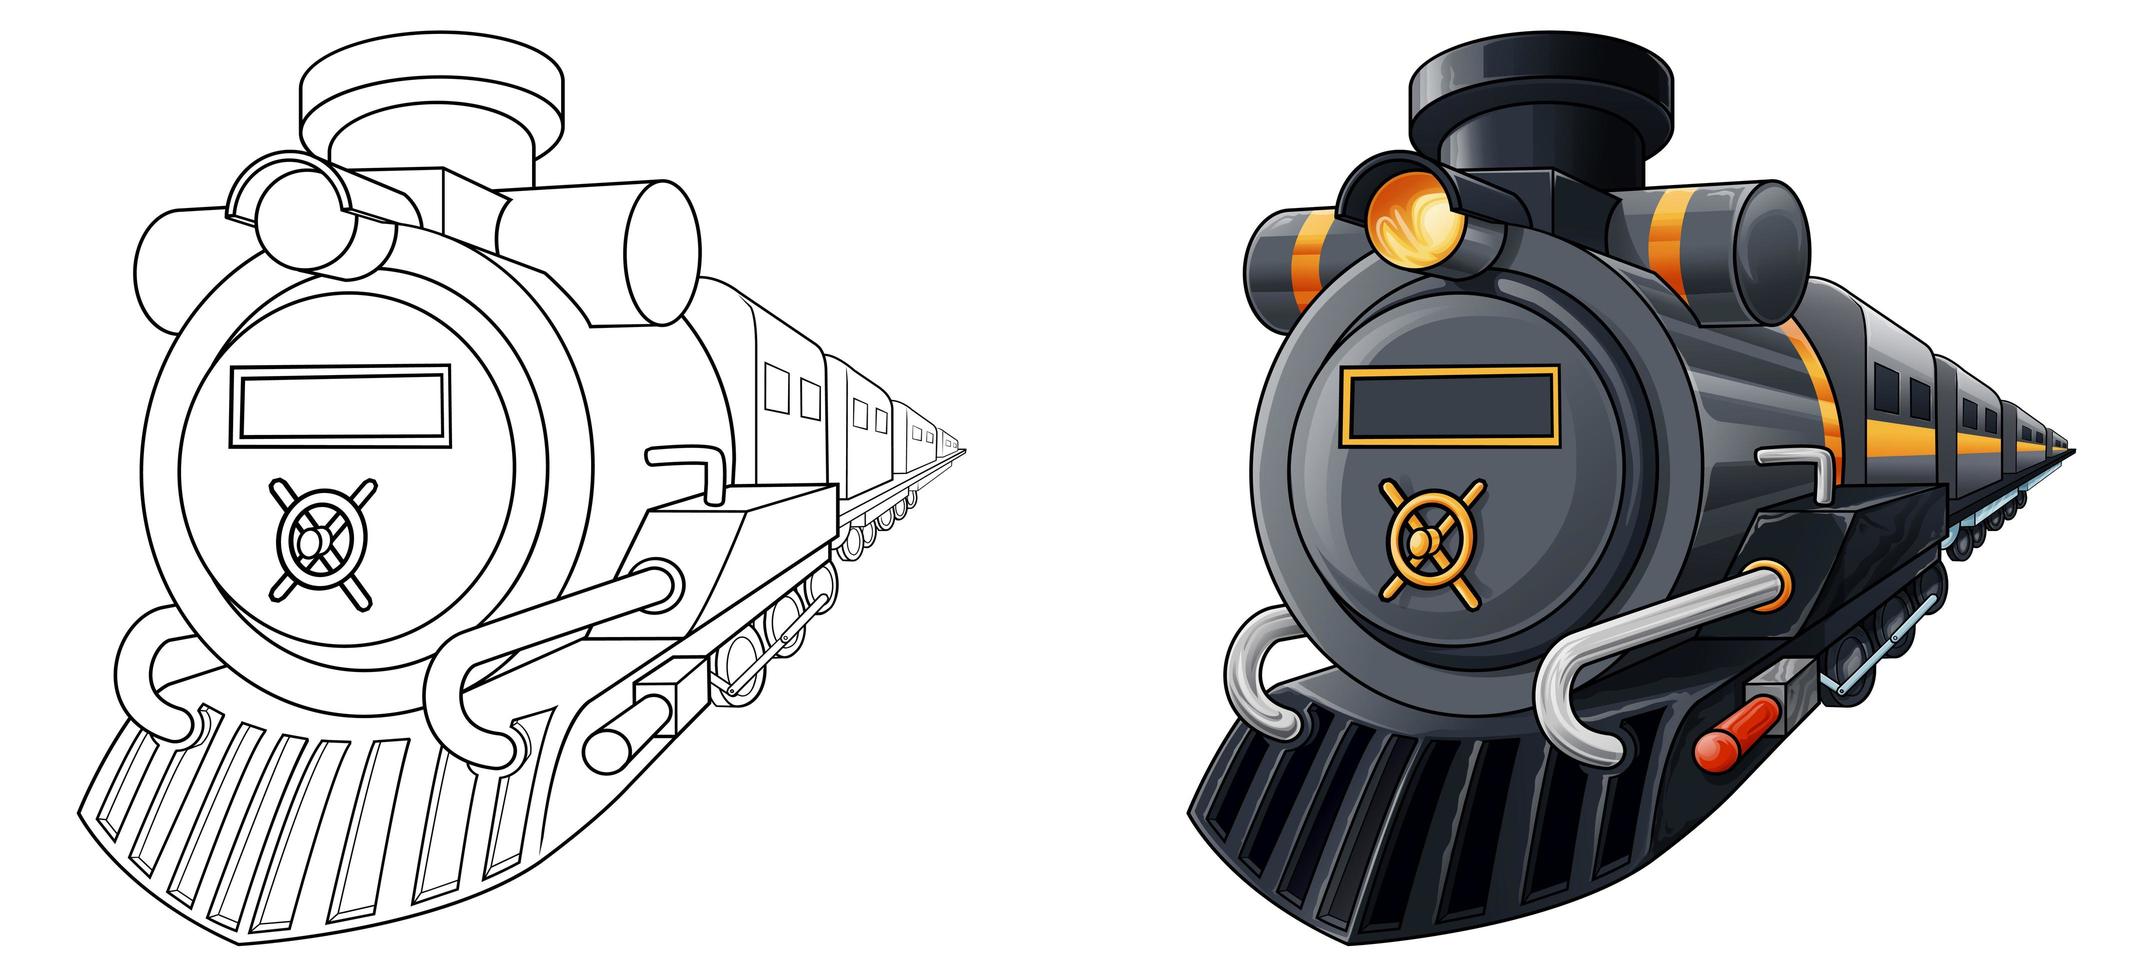 Locomotive cartoon coloring page for kids vector